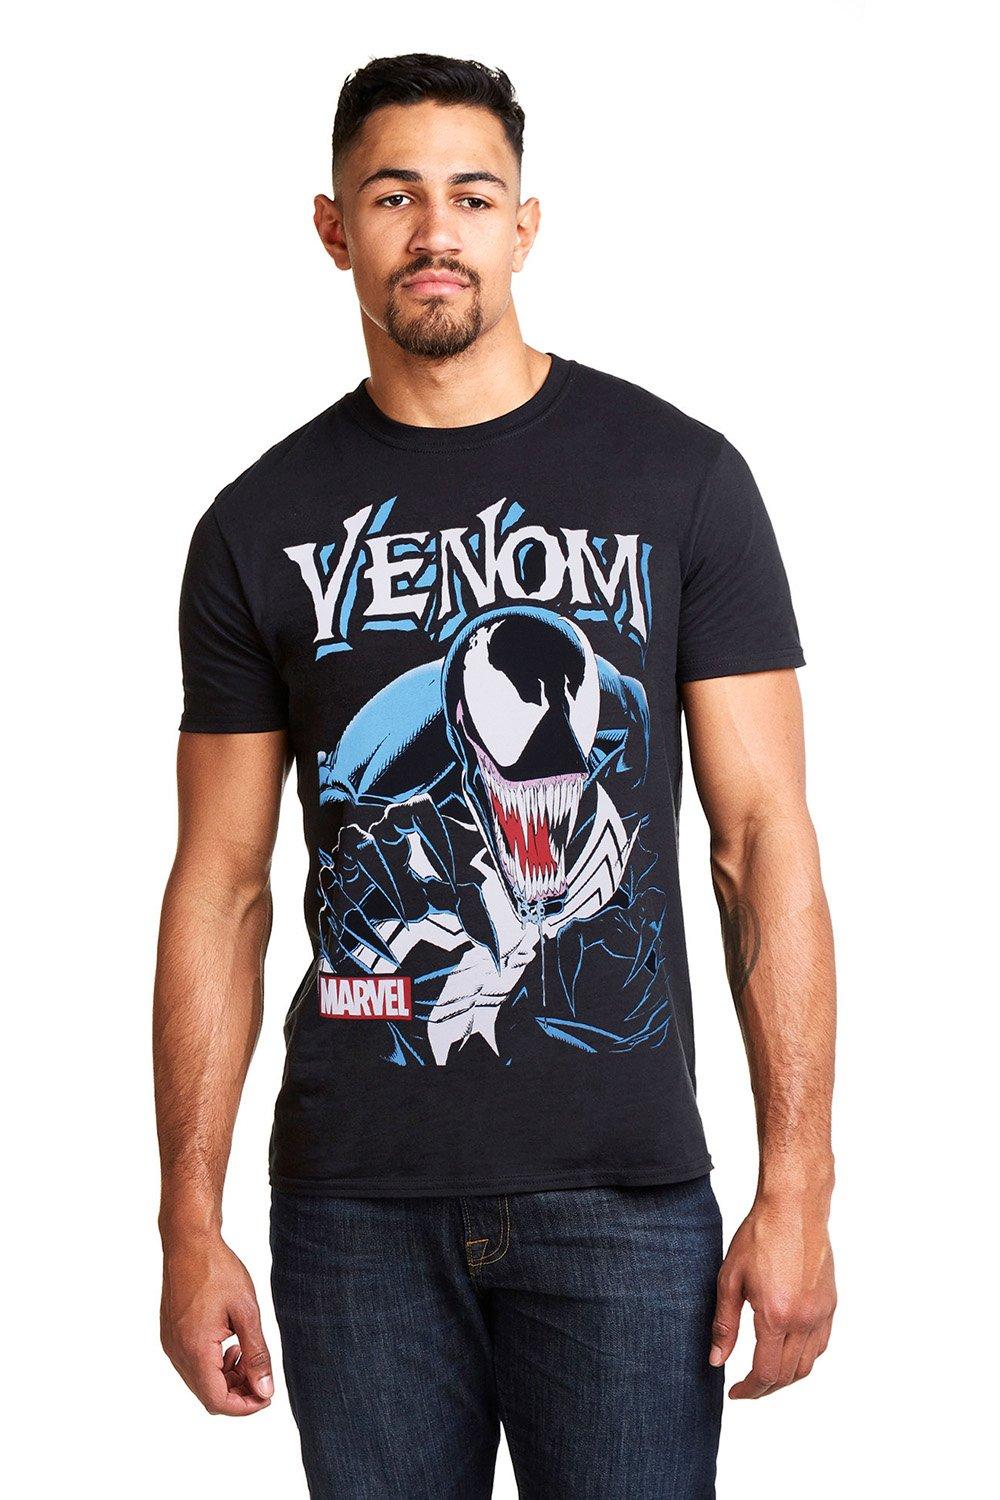 Хлопковая футболка Venom Antihero Marvel, черный хлопковая футболка venom antihero marvel черный